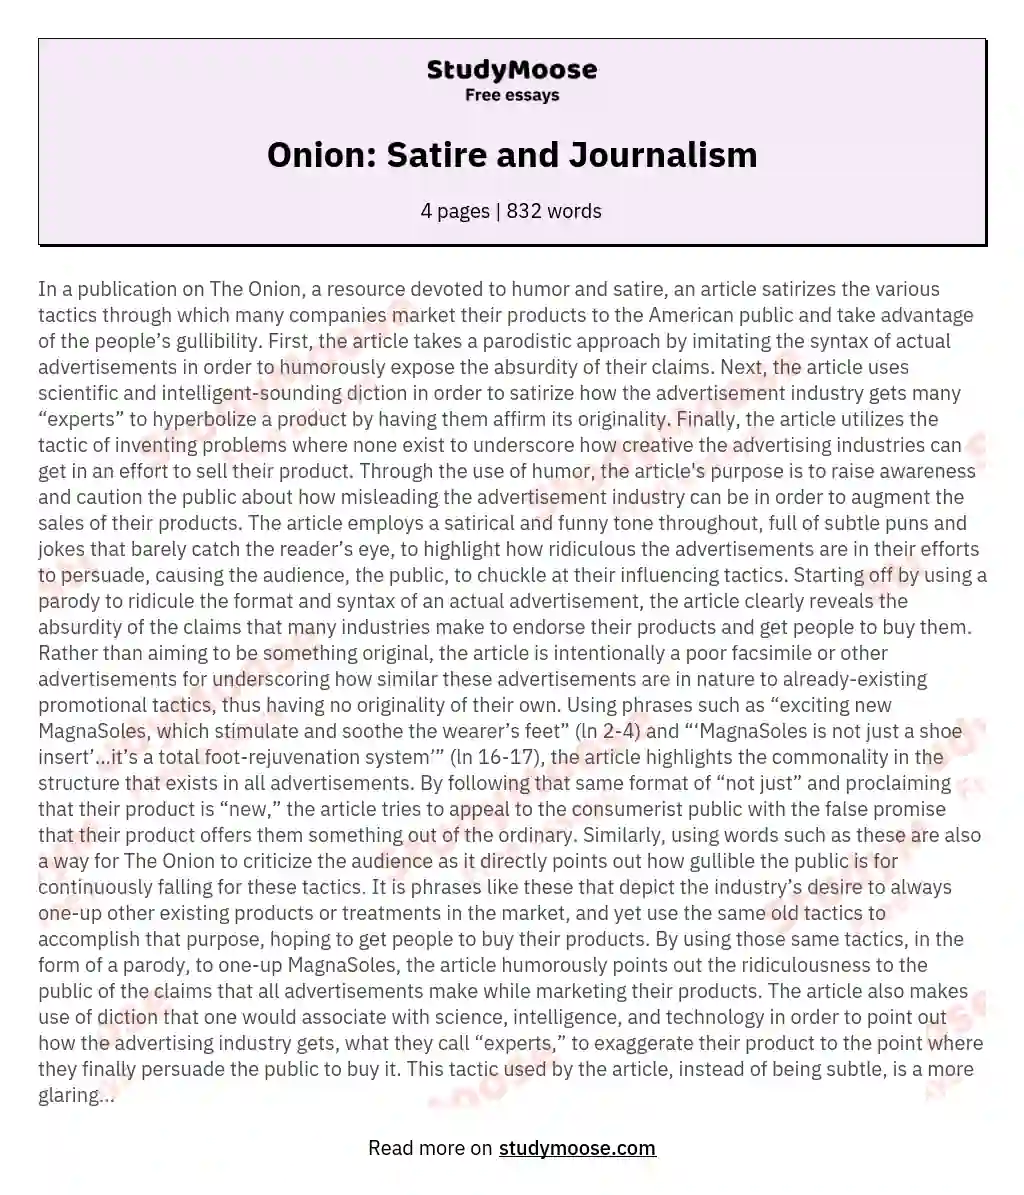 Onion: Satire and Journalism essay